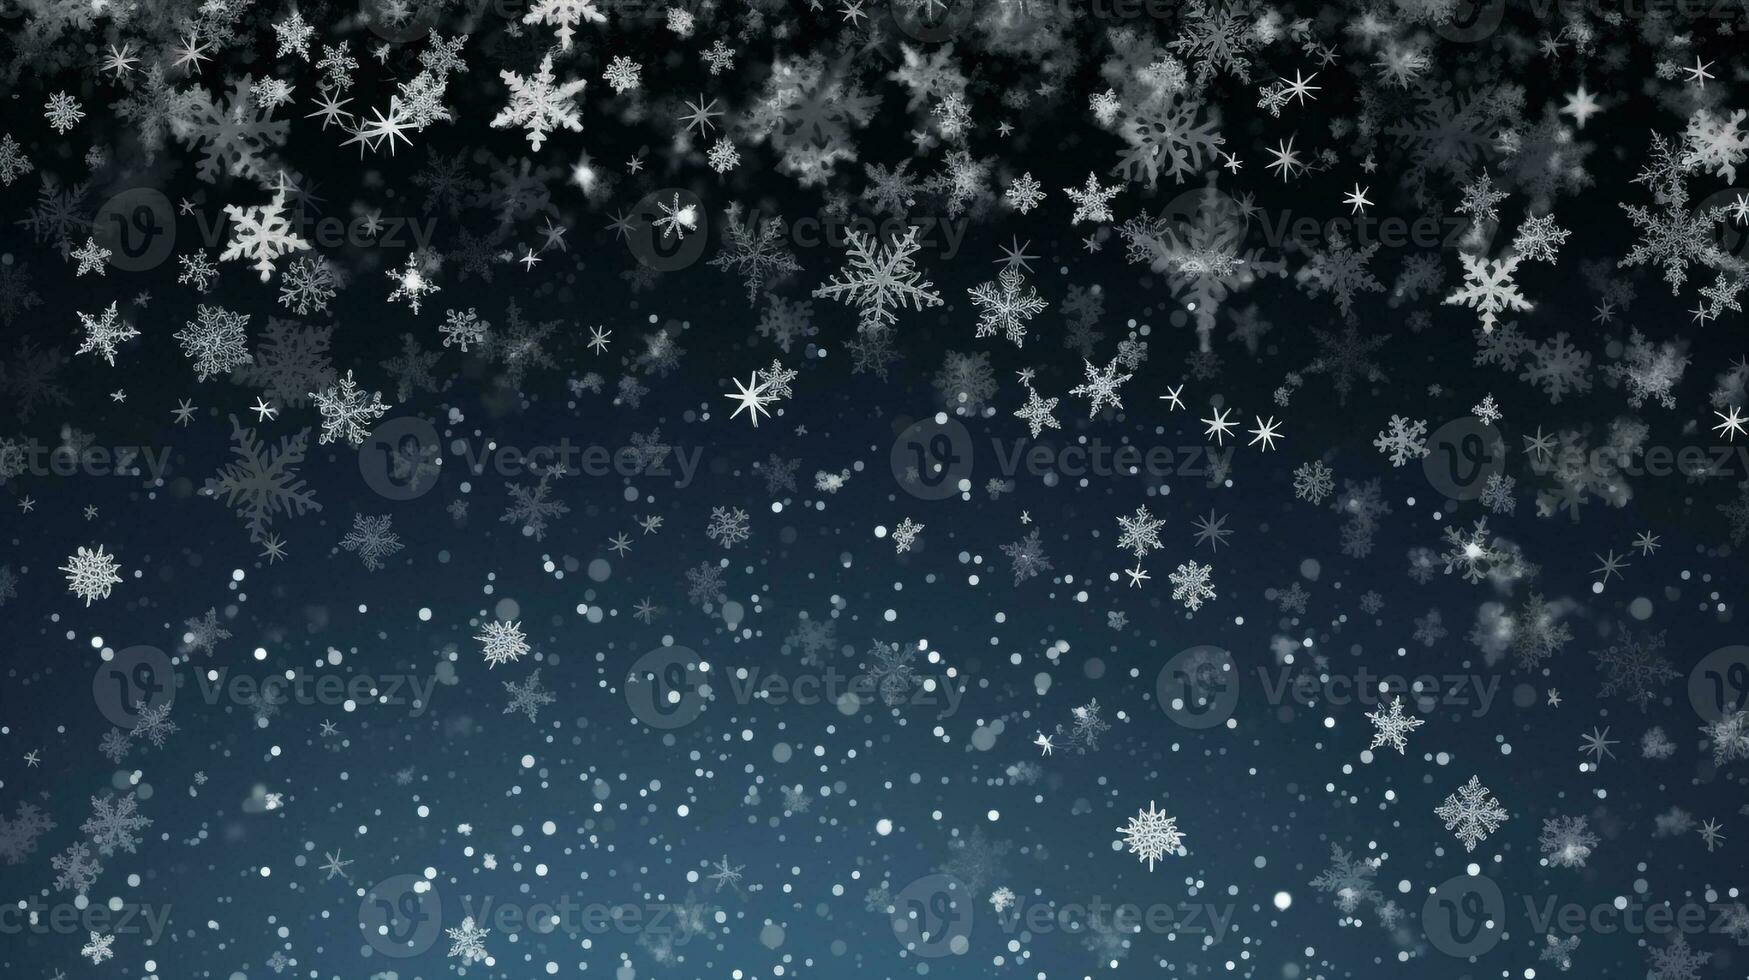 Snowflakes falling over a black blue background, christmas image, photorealistic illustration photo